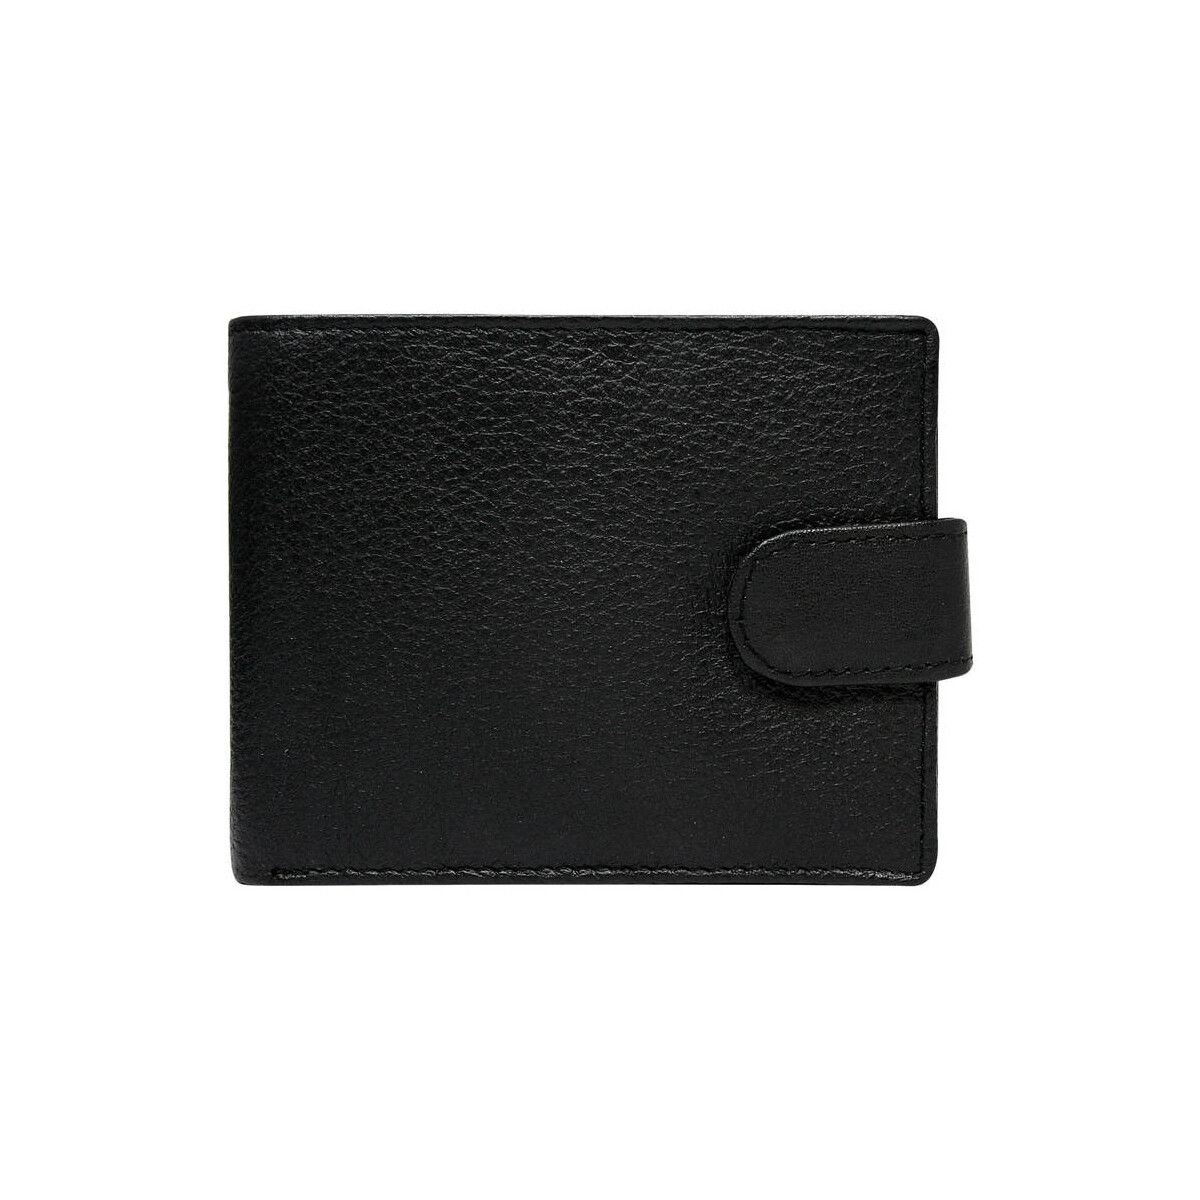 Cedar  Pánská kožená peněženka Somoto černá  Černá